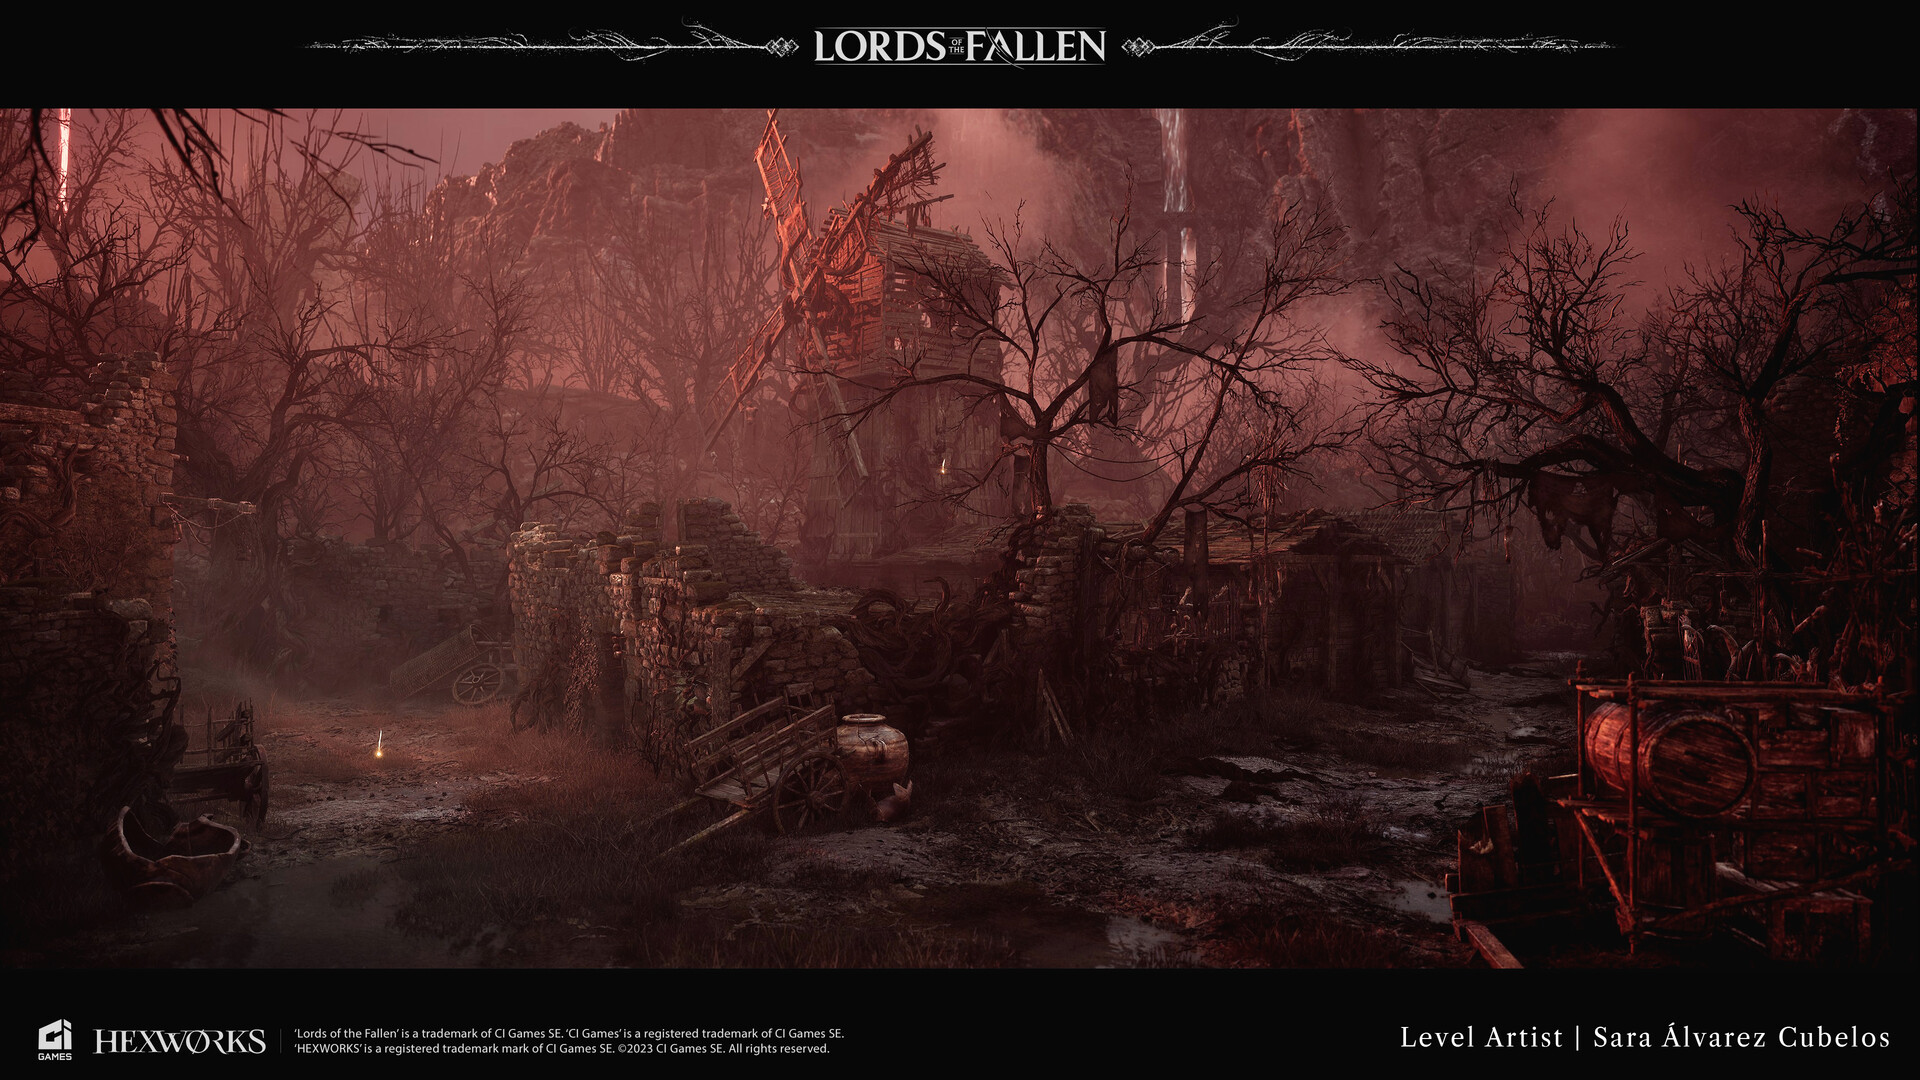 Lords of the Fallen - Walkthrough Part 1: Redcopse Village 